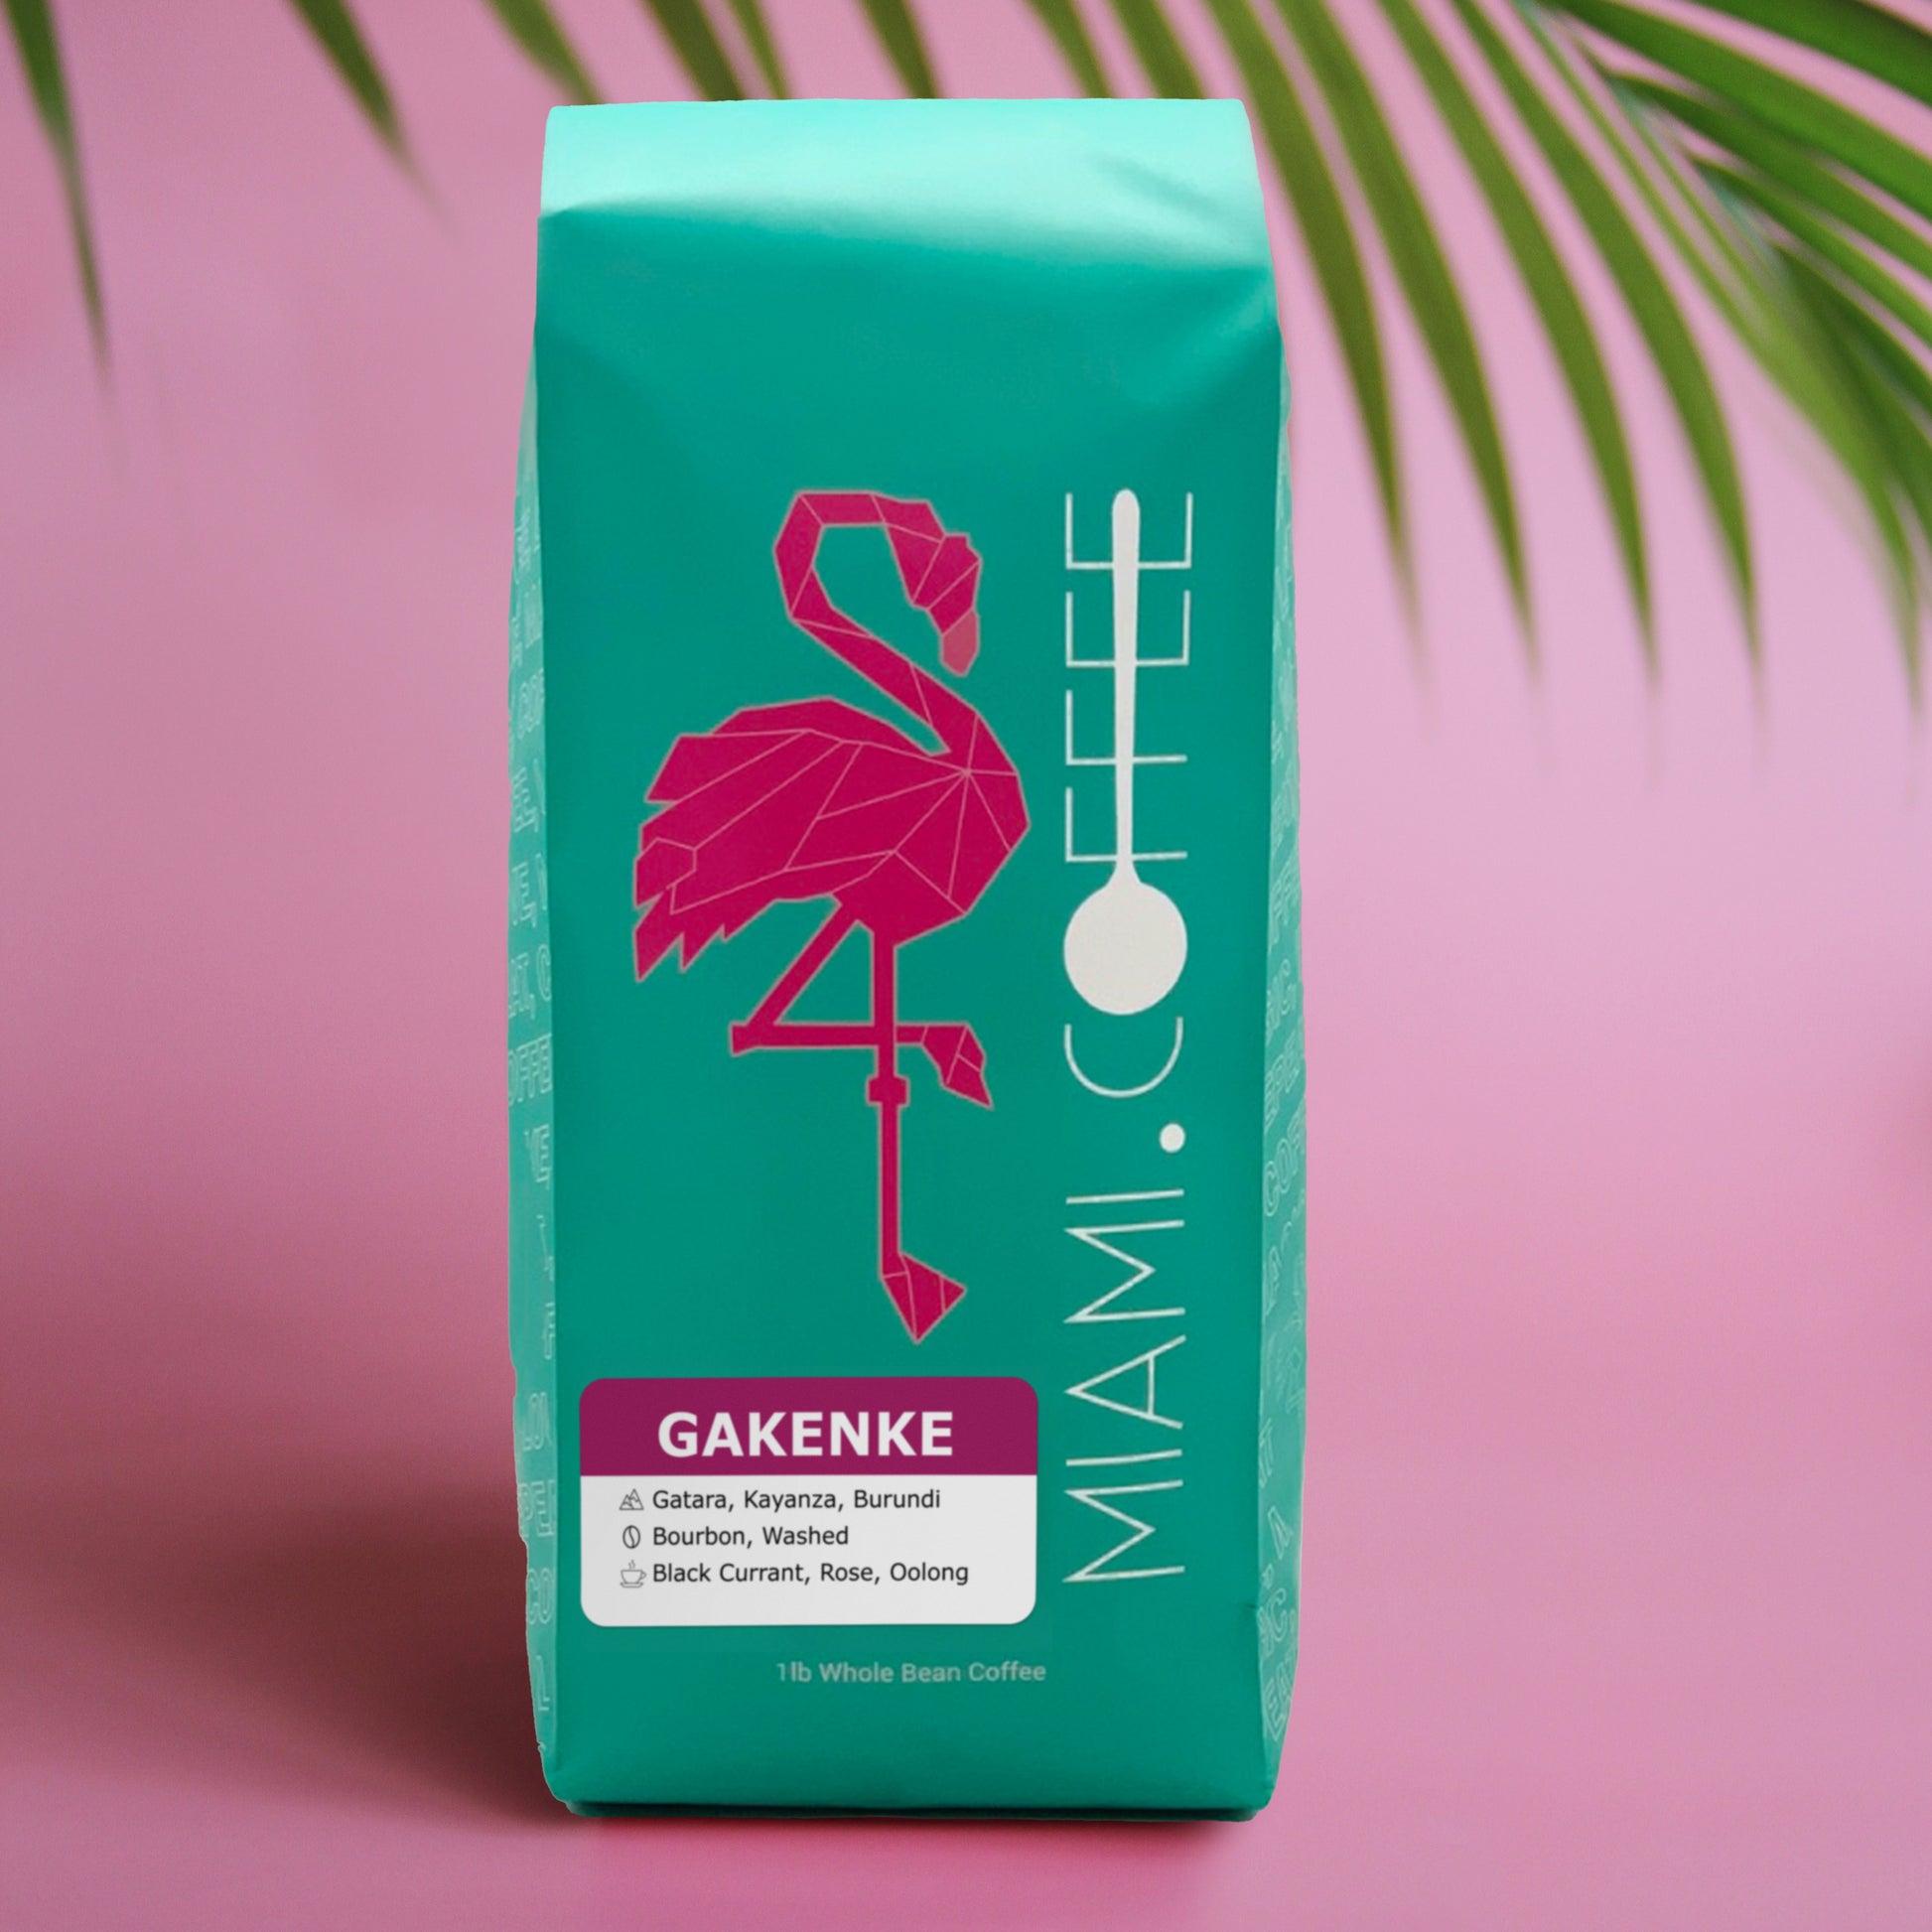 1 pound bag of Miami.Coffee Burundi, Gakenke Processing station near Gatara in the Kayanza Province, Bourbon cultivar, washed process, tasting notes: Black Currant, Rose, Oolong